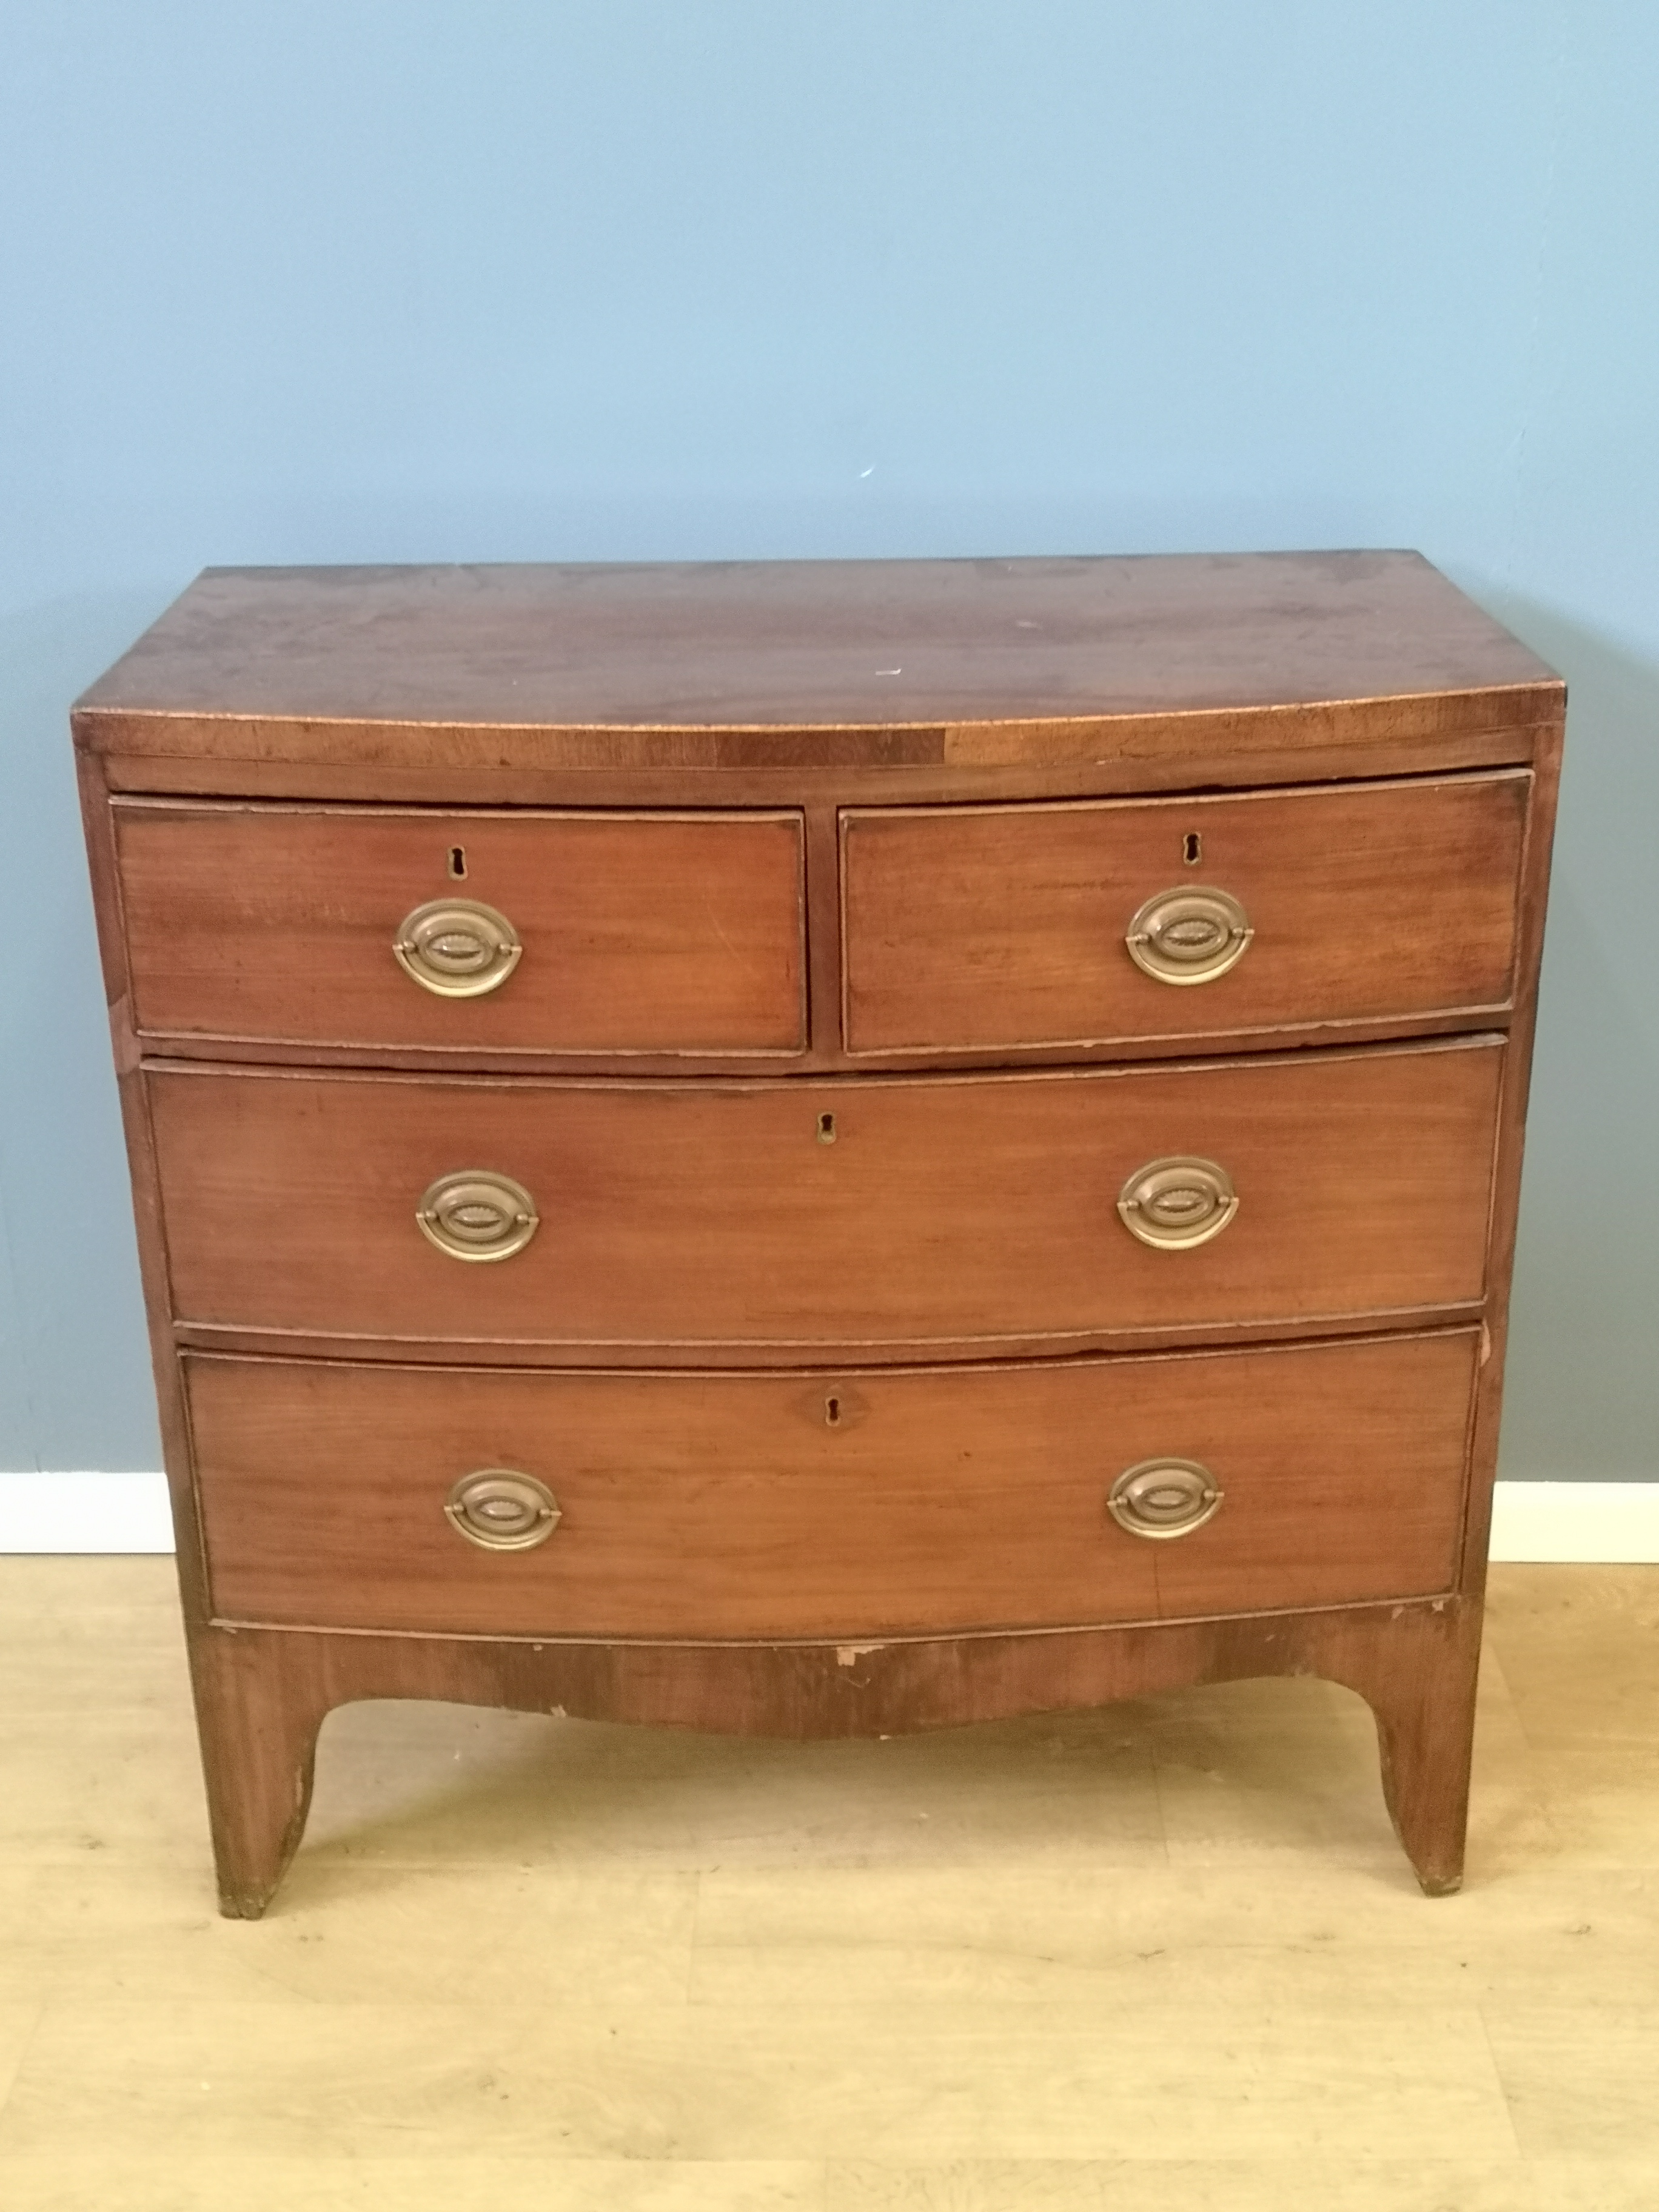 Regency mahogany chest of drawers